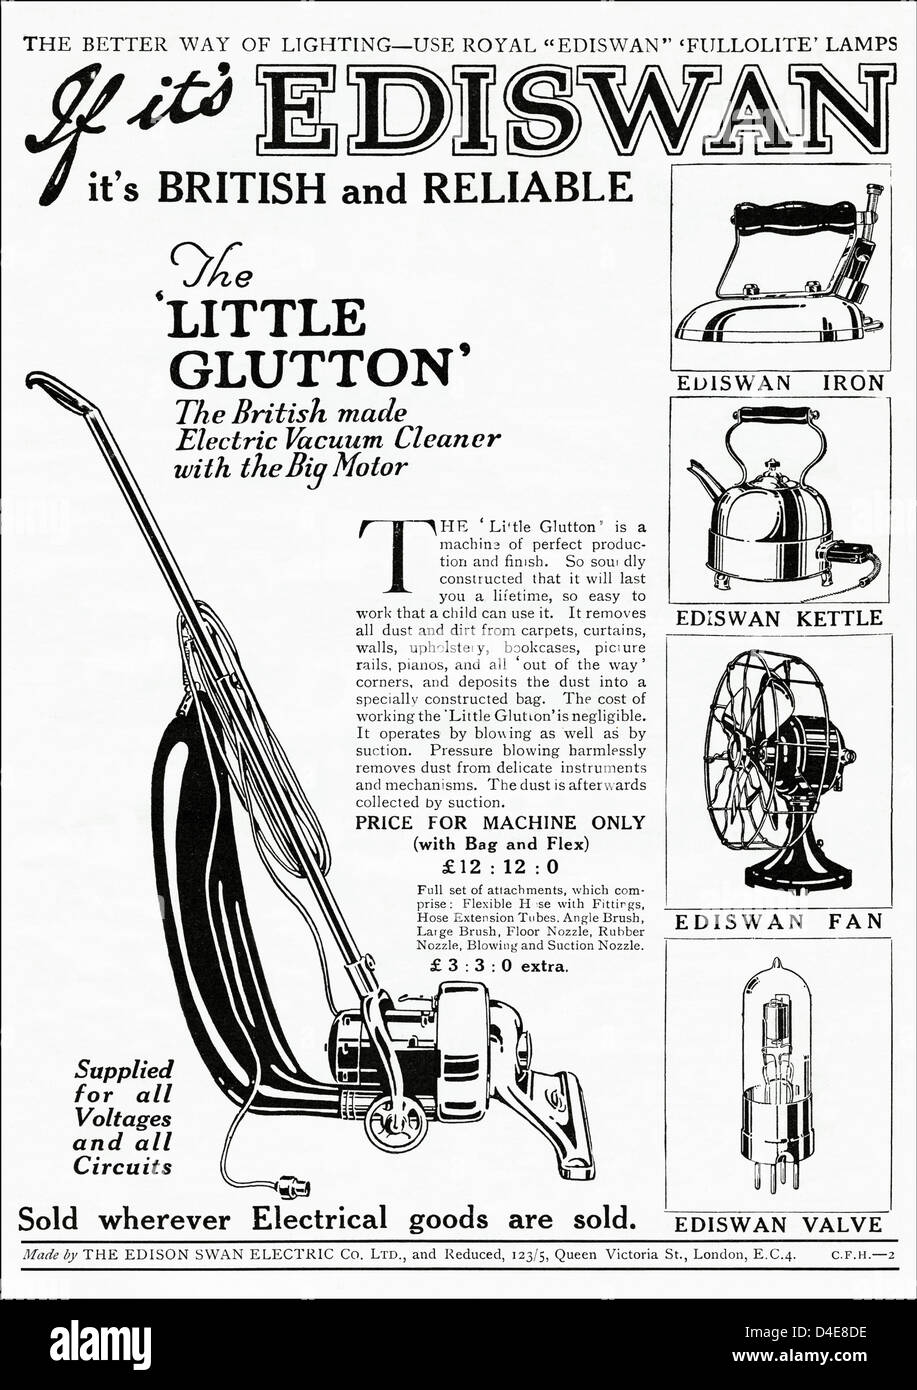 Original 1920s era vintage advertisement print from English magazine advertising EDISWAN electric vacuum cleaner by The Edison Swan Electric Co Ltd Stock Photo